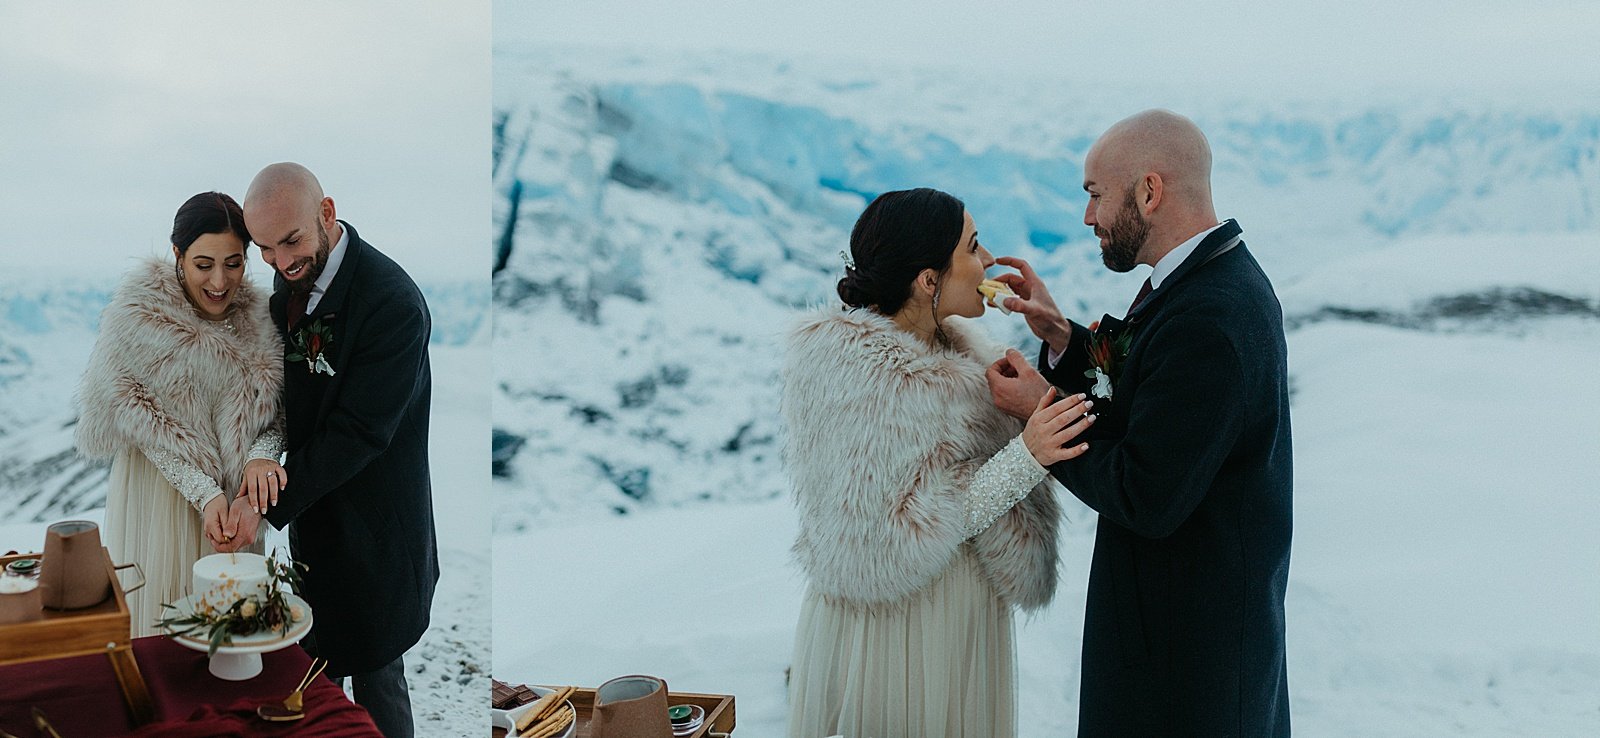  Groom feeding bride cake on a snowy mountaintop in Alaska 